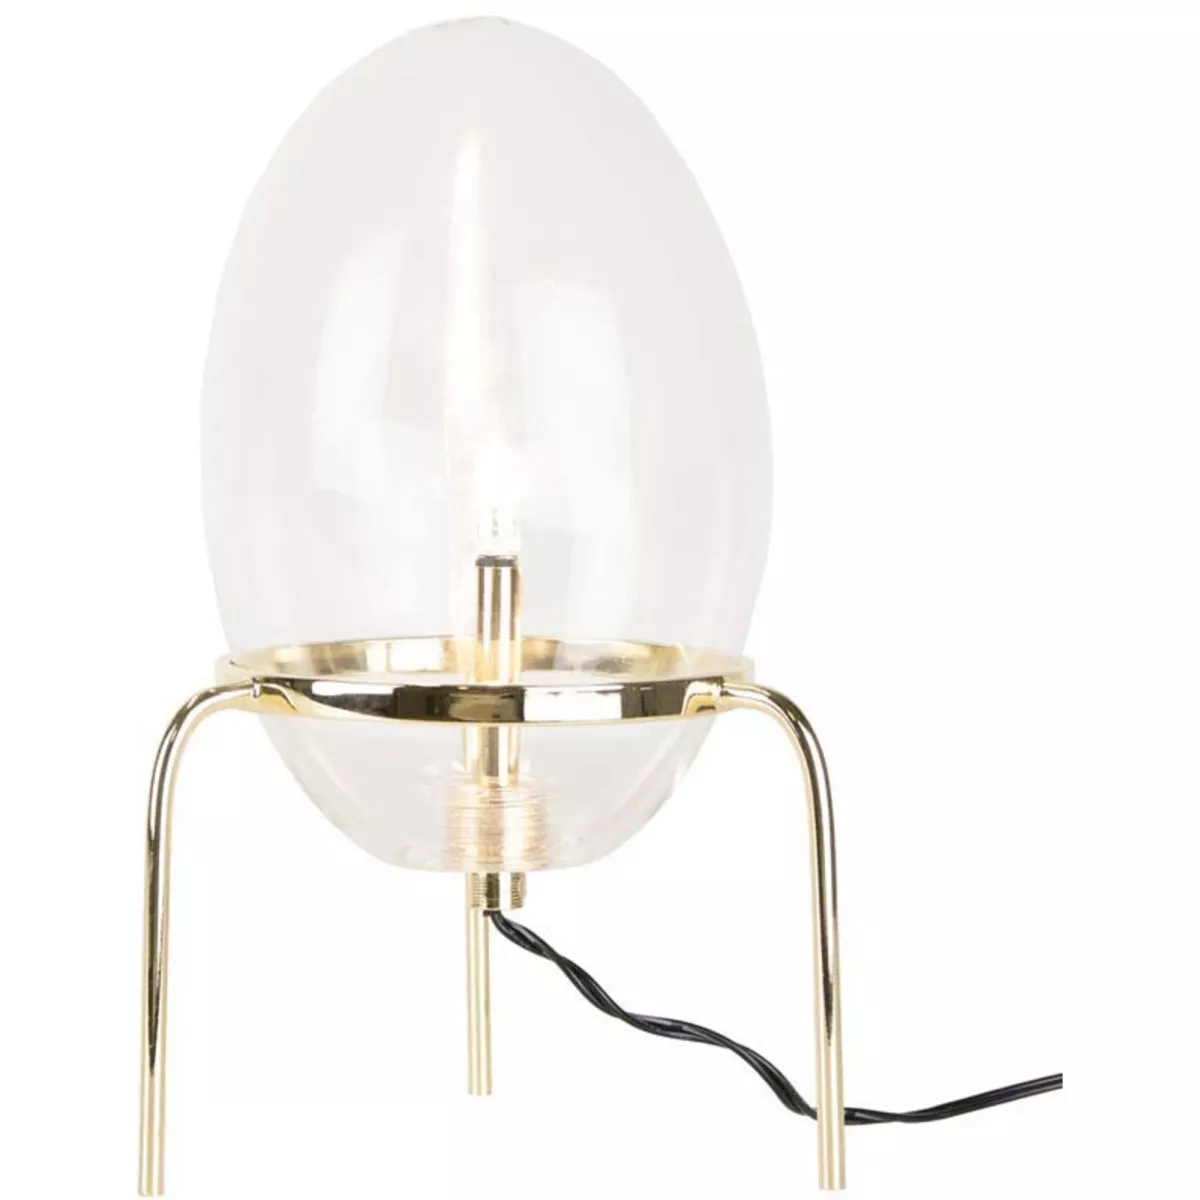 #1 - Globen Lighting Drops bordlampe, Messing